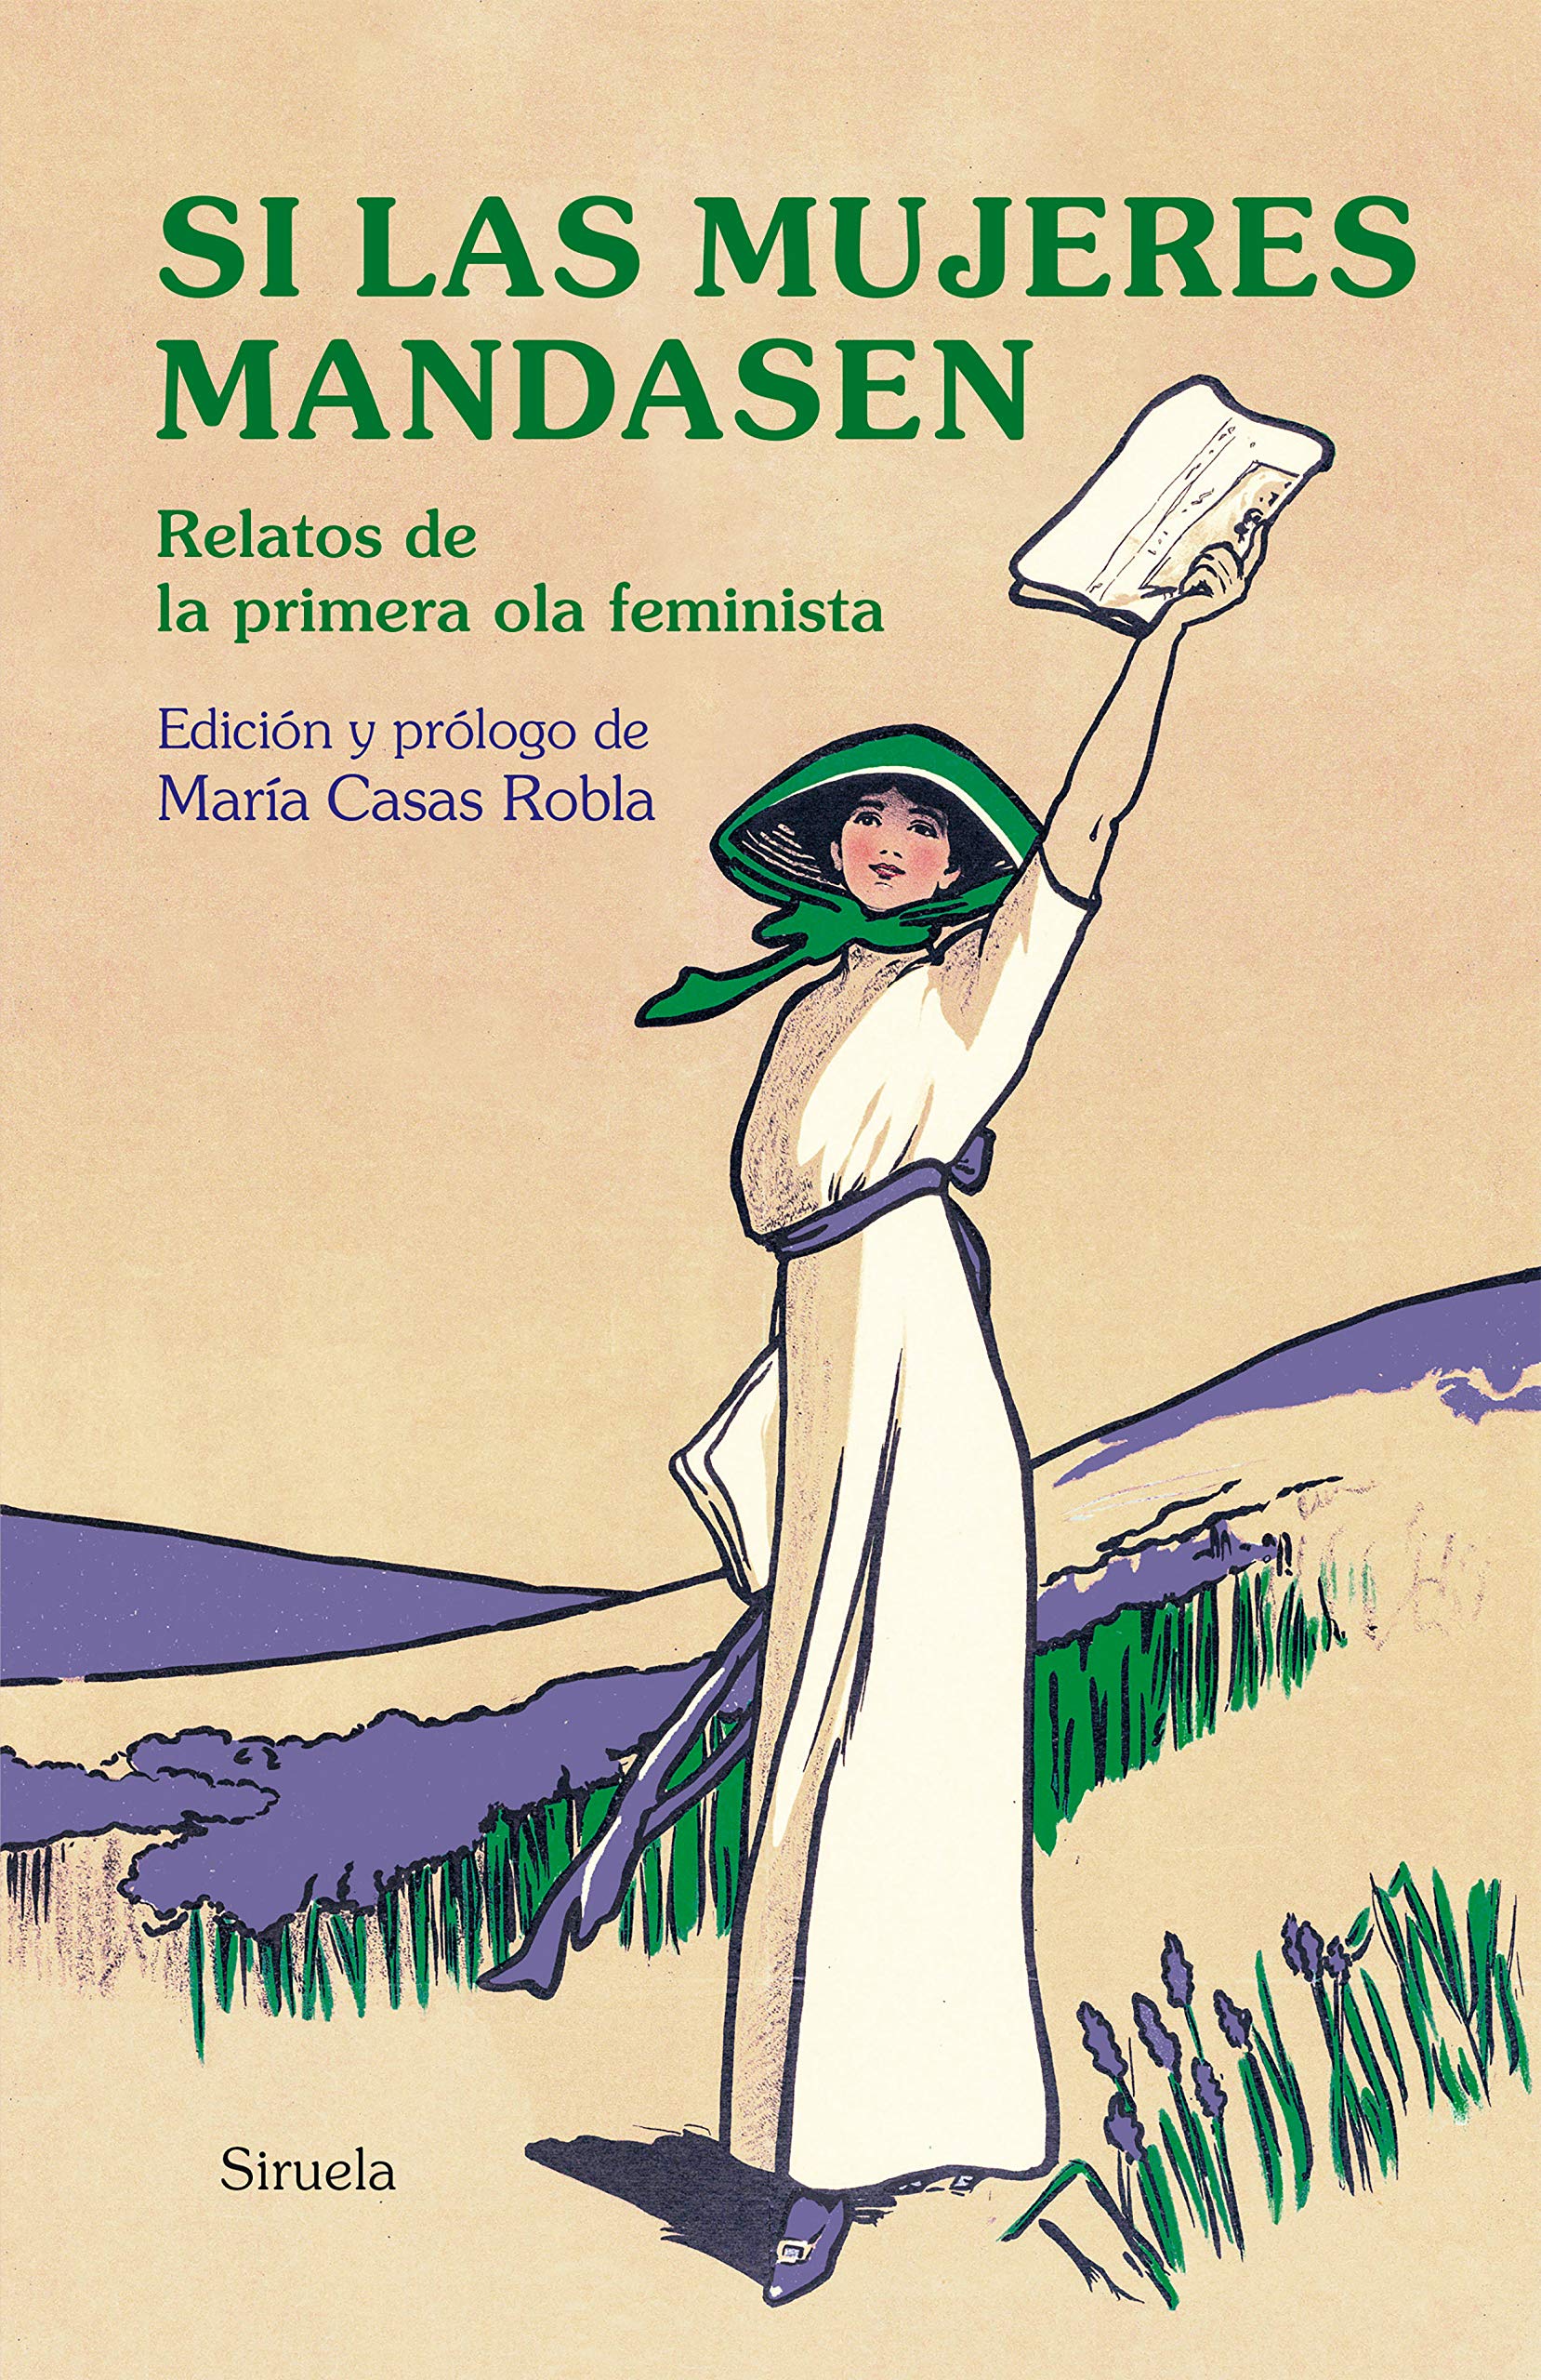 Primera ola feminista: el cambio del relato